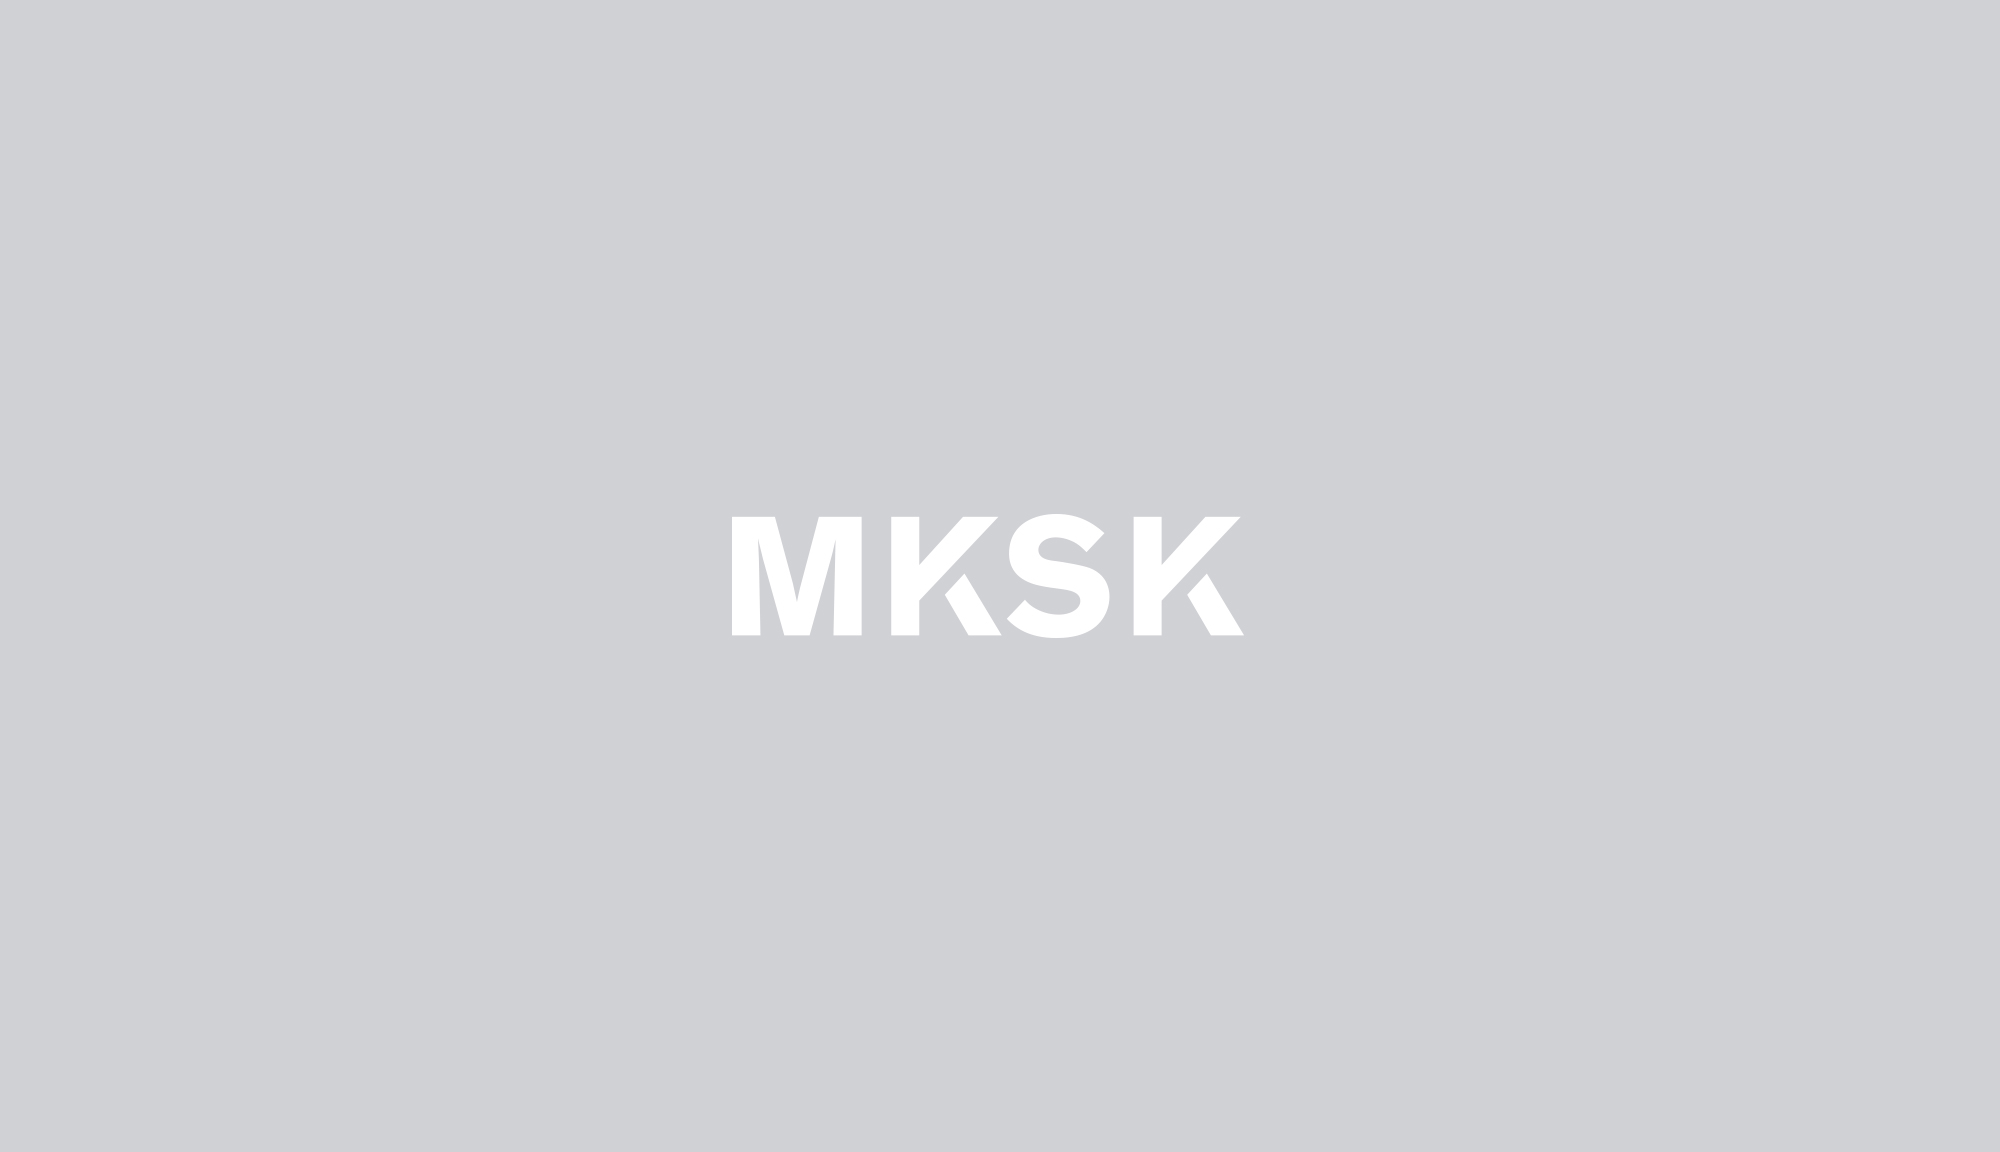 MKSK logo design